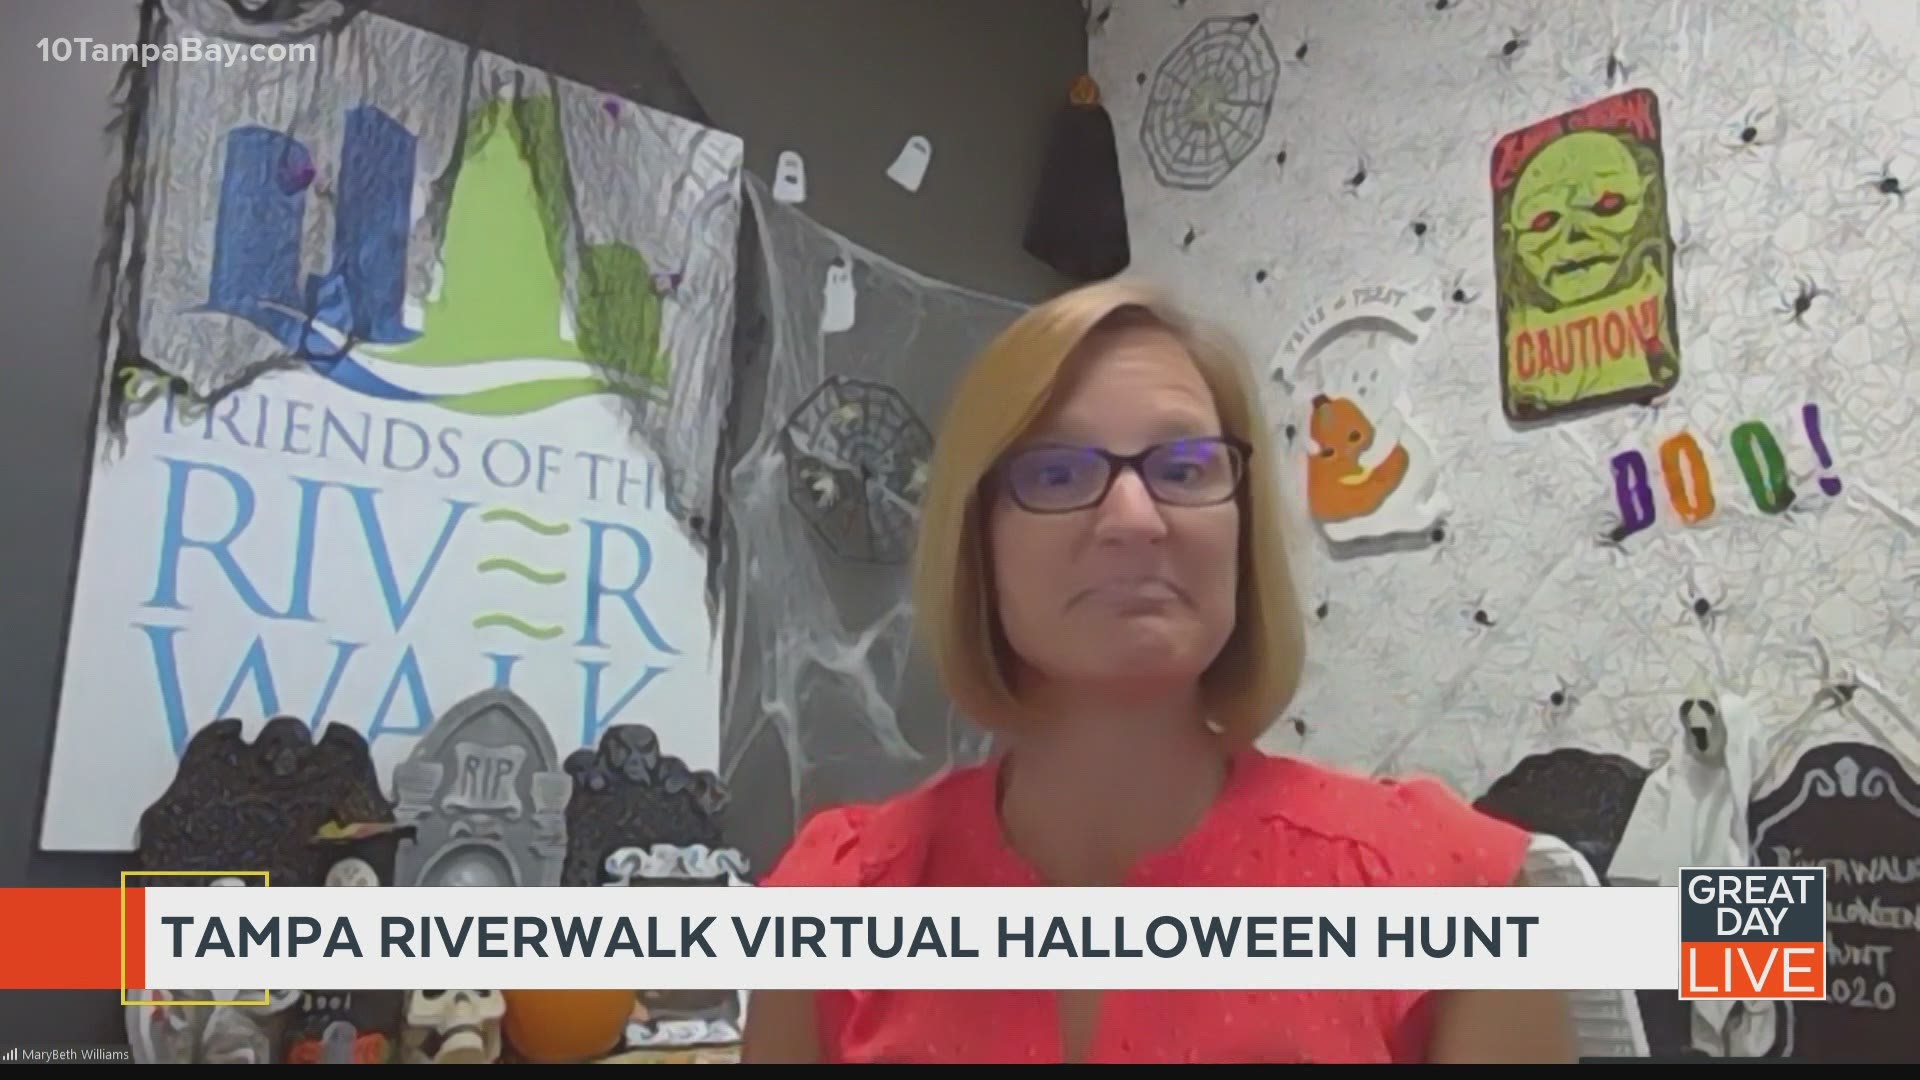 Virtual Halloween hunt comes to Tampa's Riverwalk